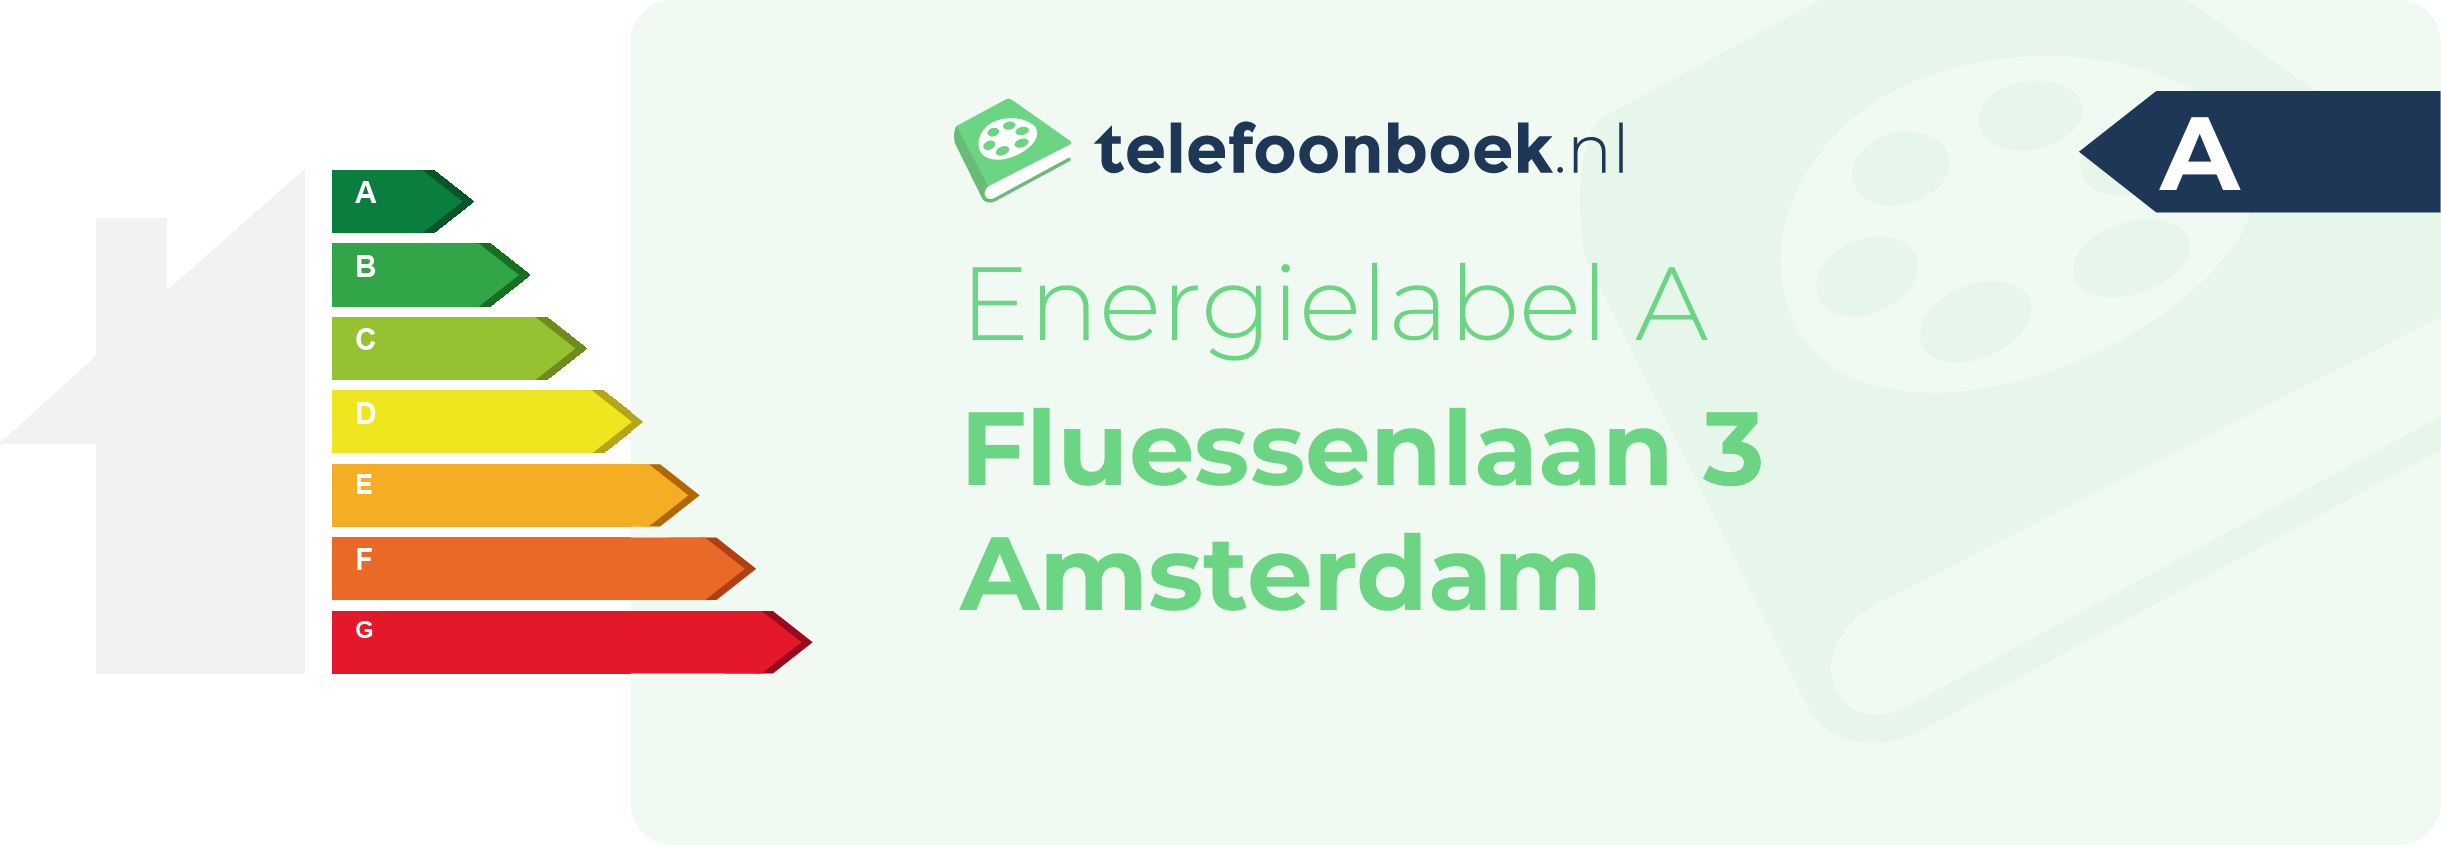 Energielabel Fluessenlaan 3 Amsterdam